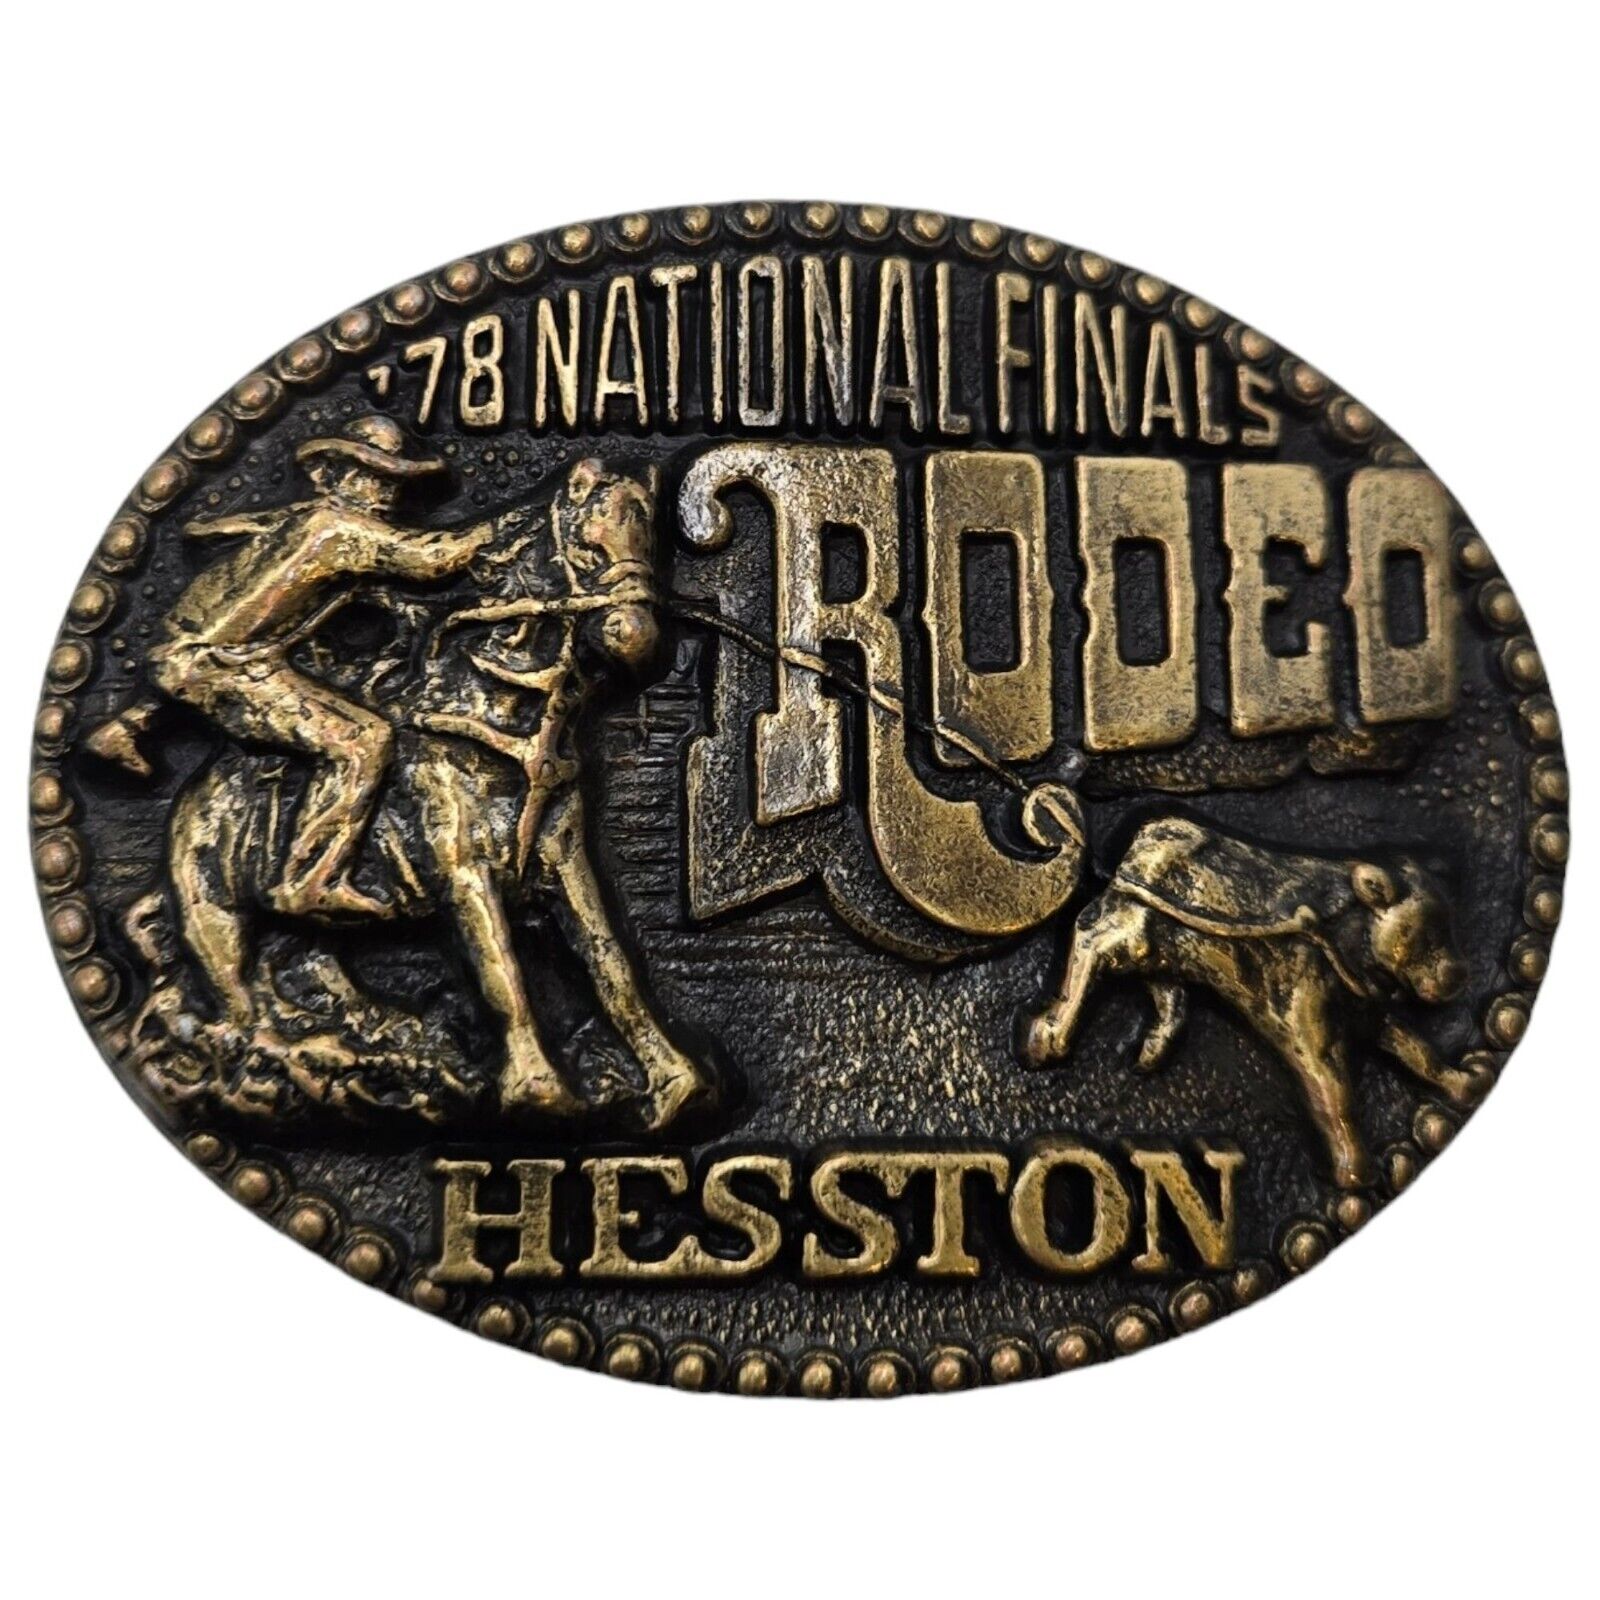 1978 NFR Rodeo Belt Buckle Hesston Cowboy Calf Roper National Finals Oklahoma